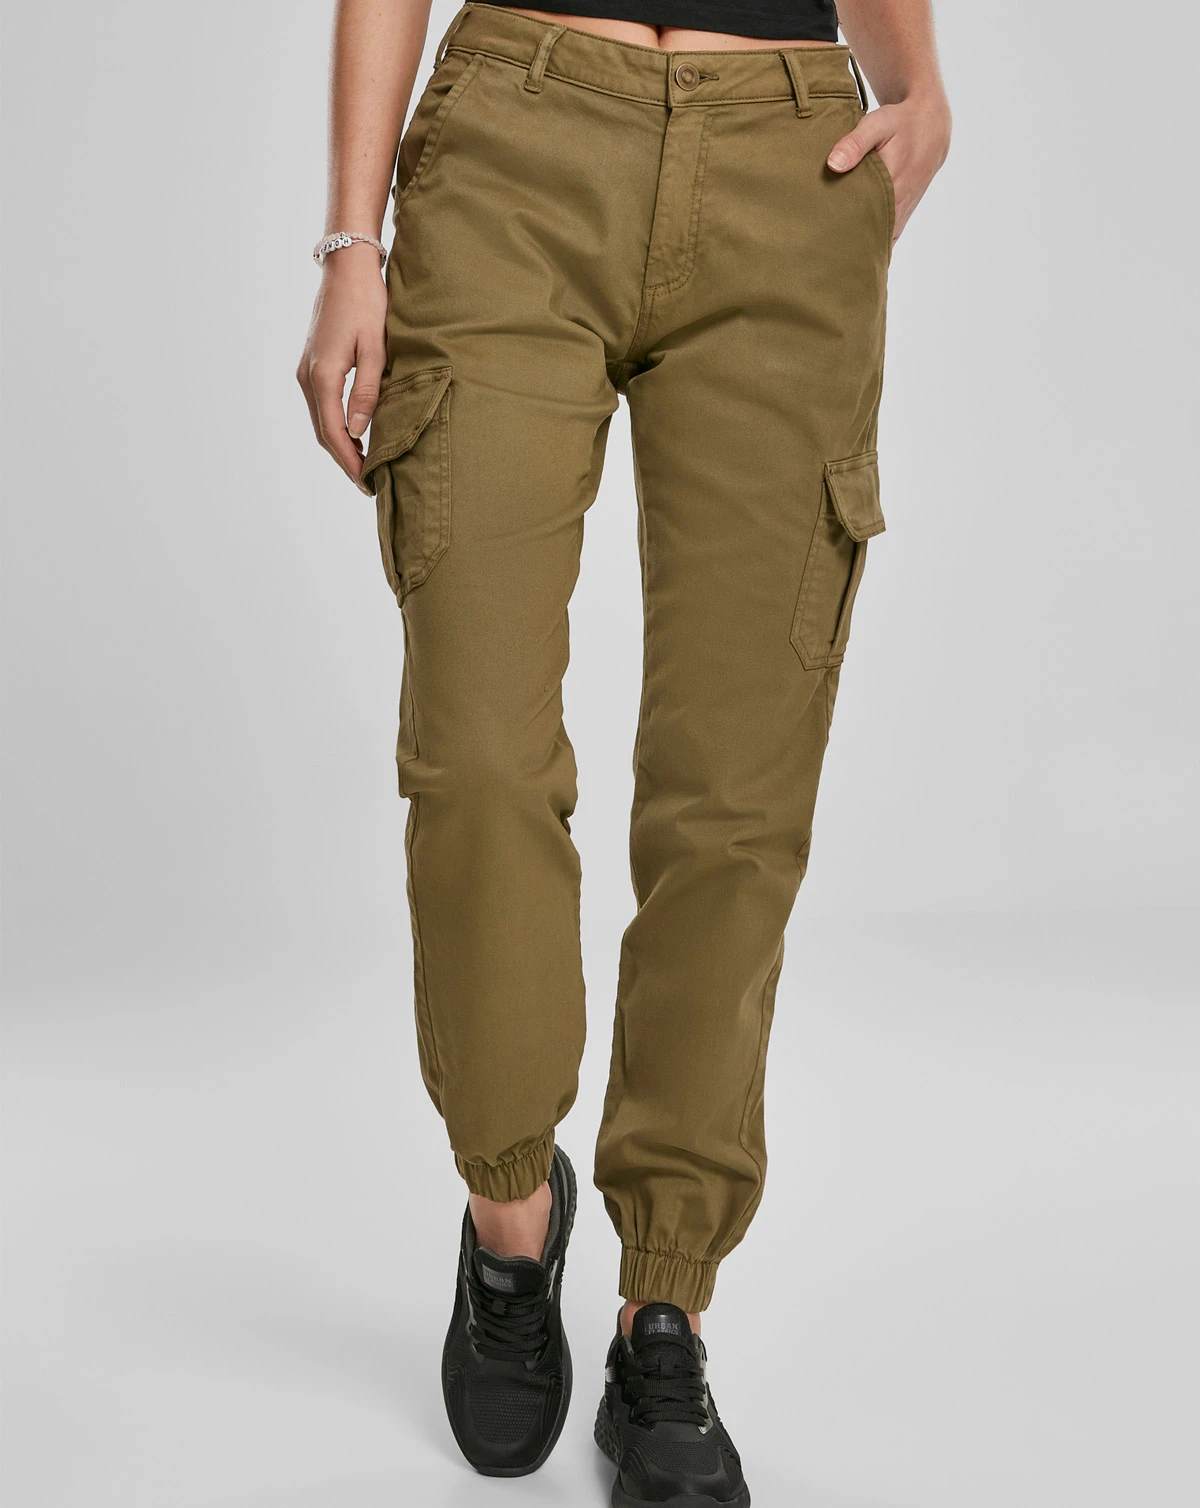 Skinny Cargo Pants | Target Australia